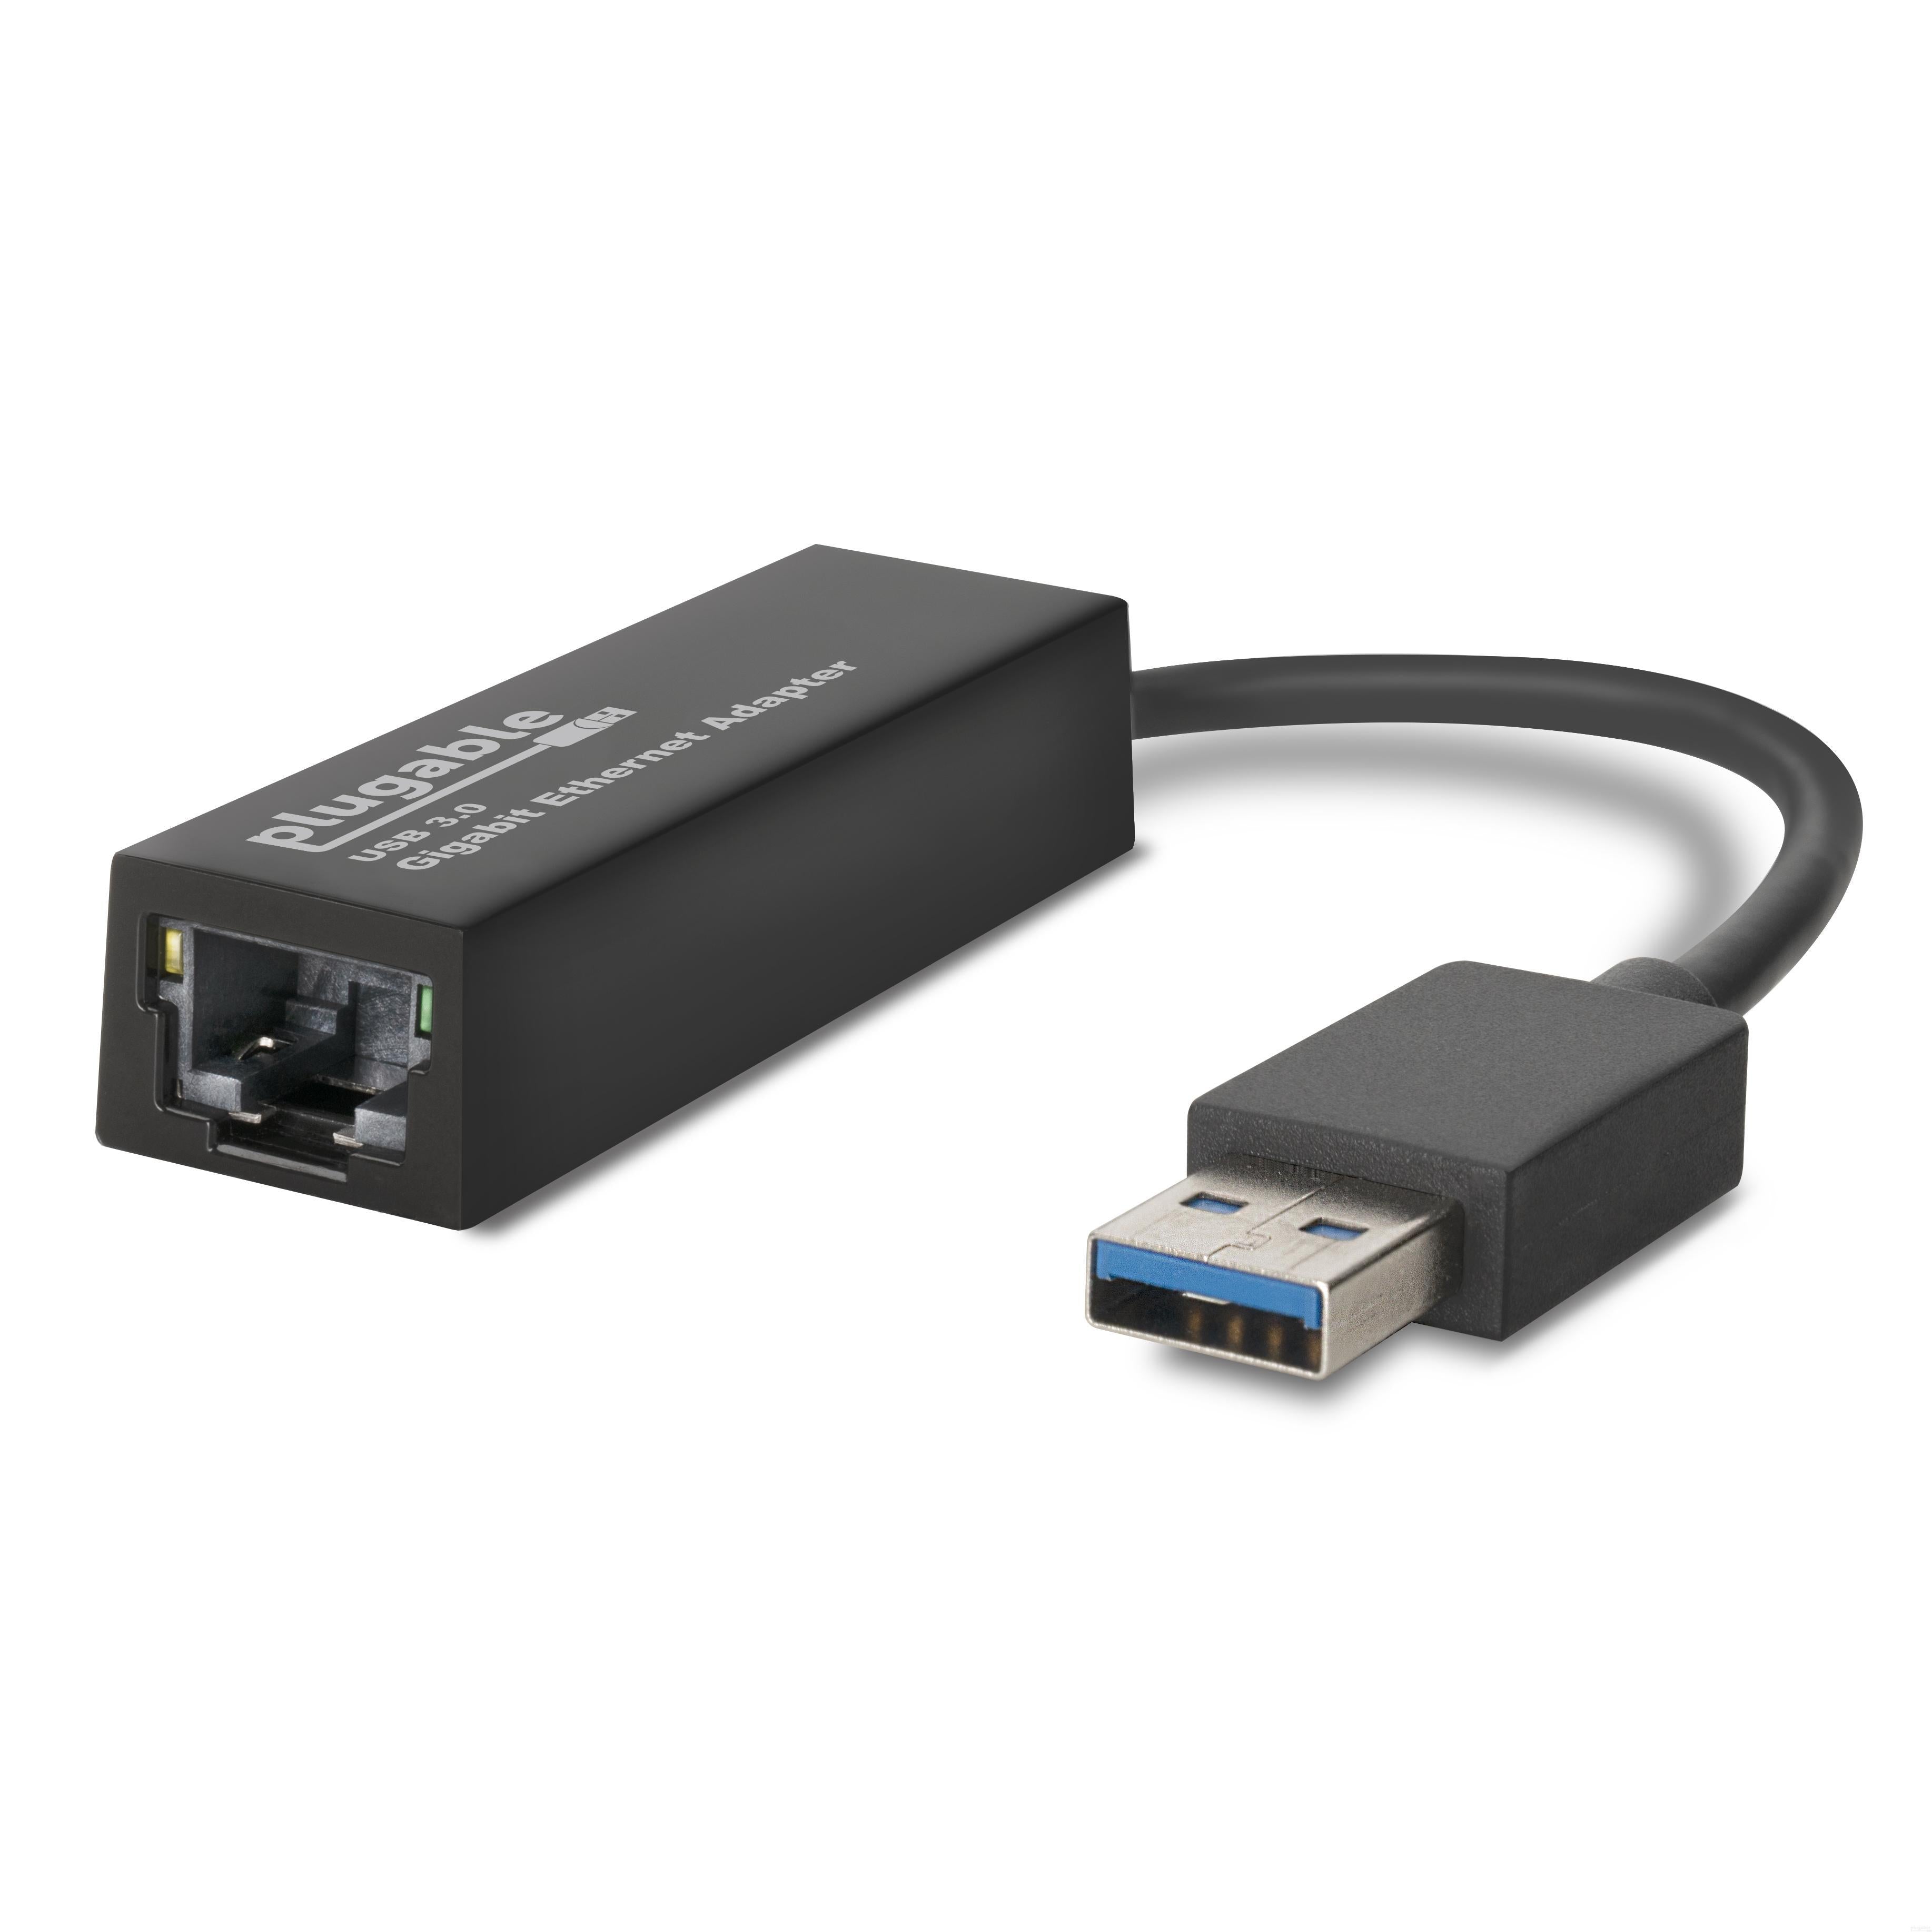 Plugable USB 3.0 Gigabit Ethernet Adapter